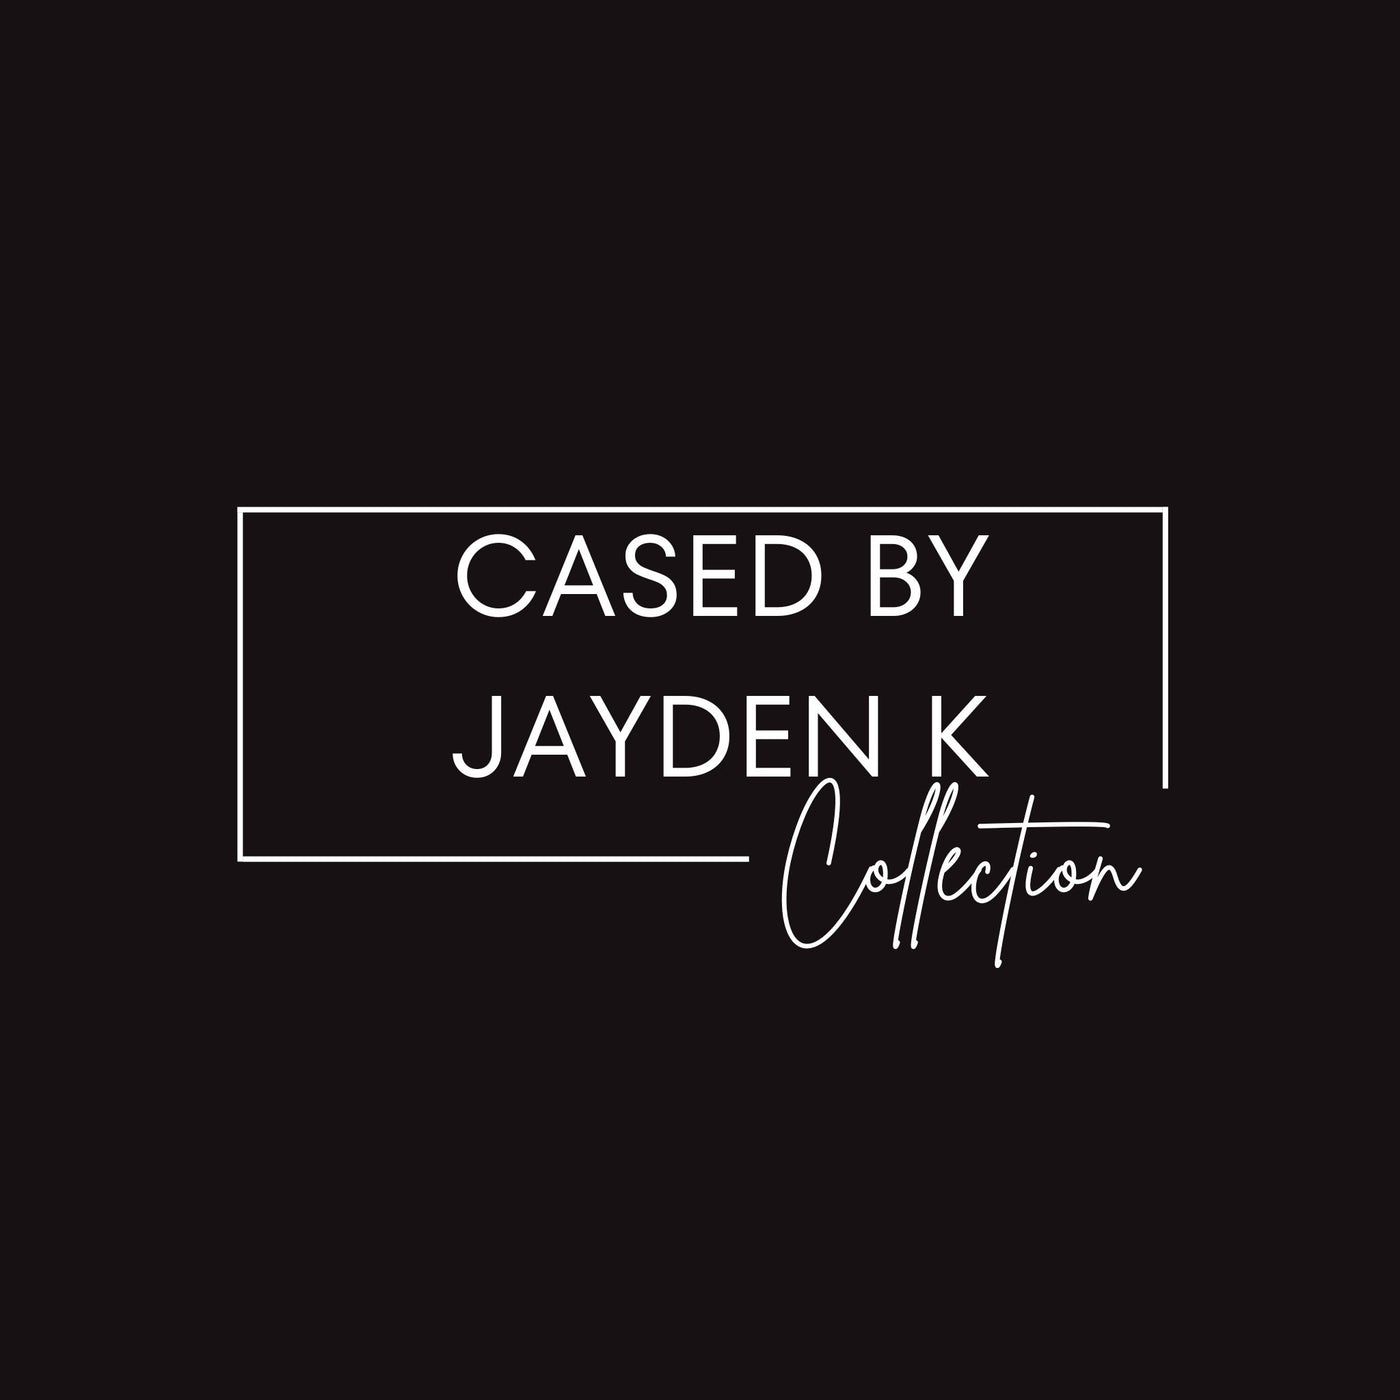 Cased by Jayden K